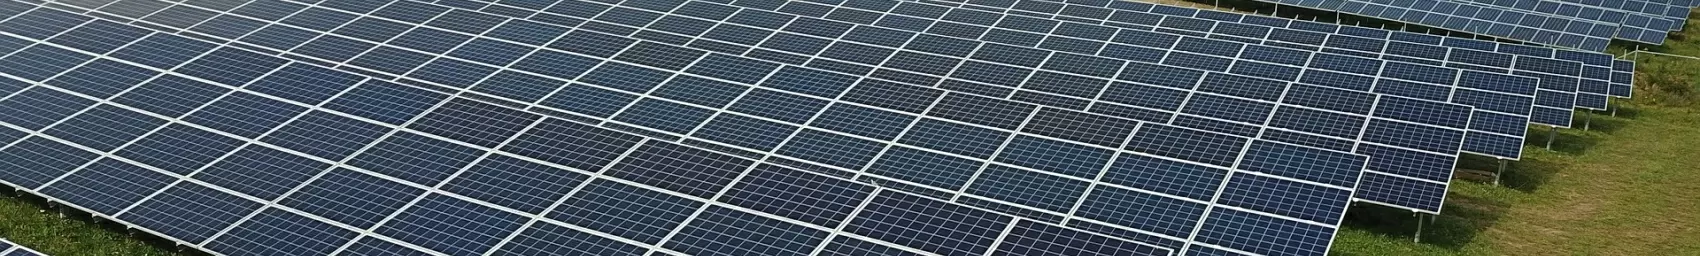 Panels photovoltaic solar energy